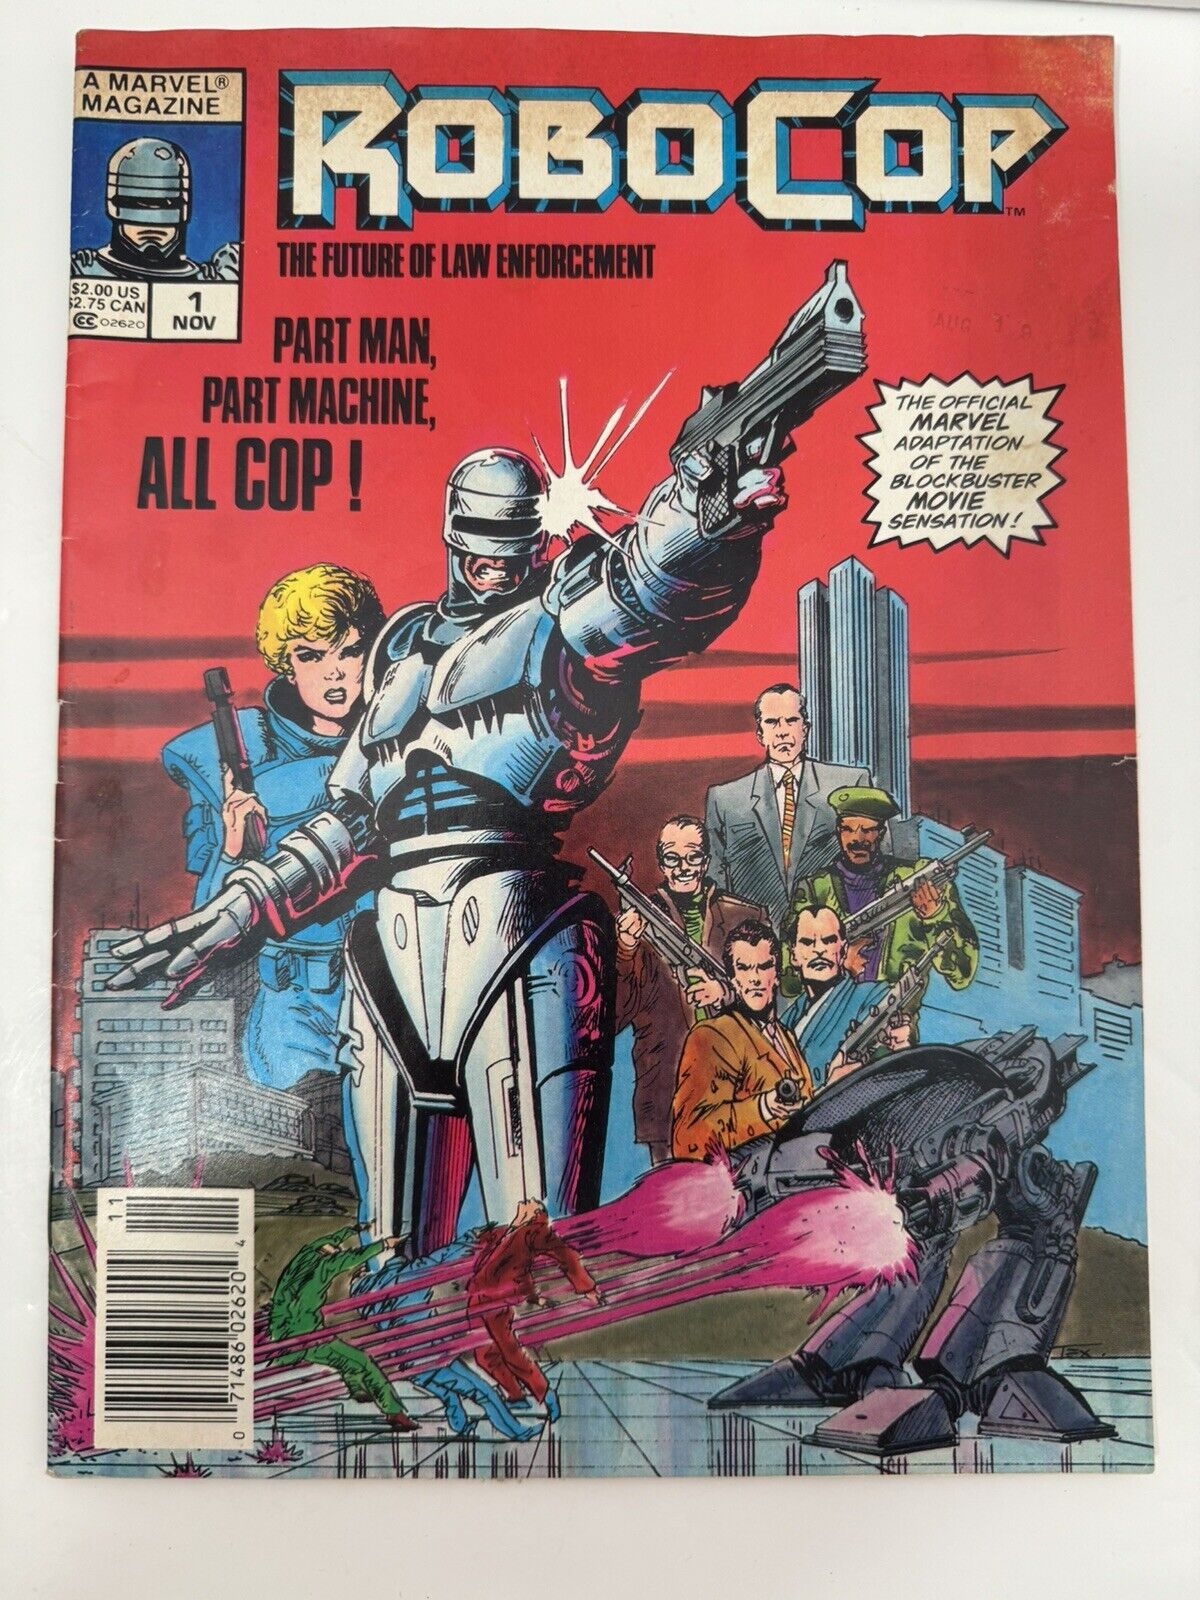 RoboCop Magazine #1 [Marvel 1987] 1st appearance